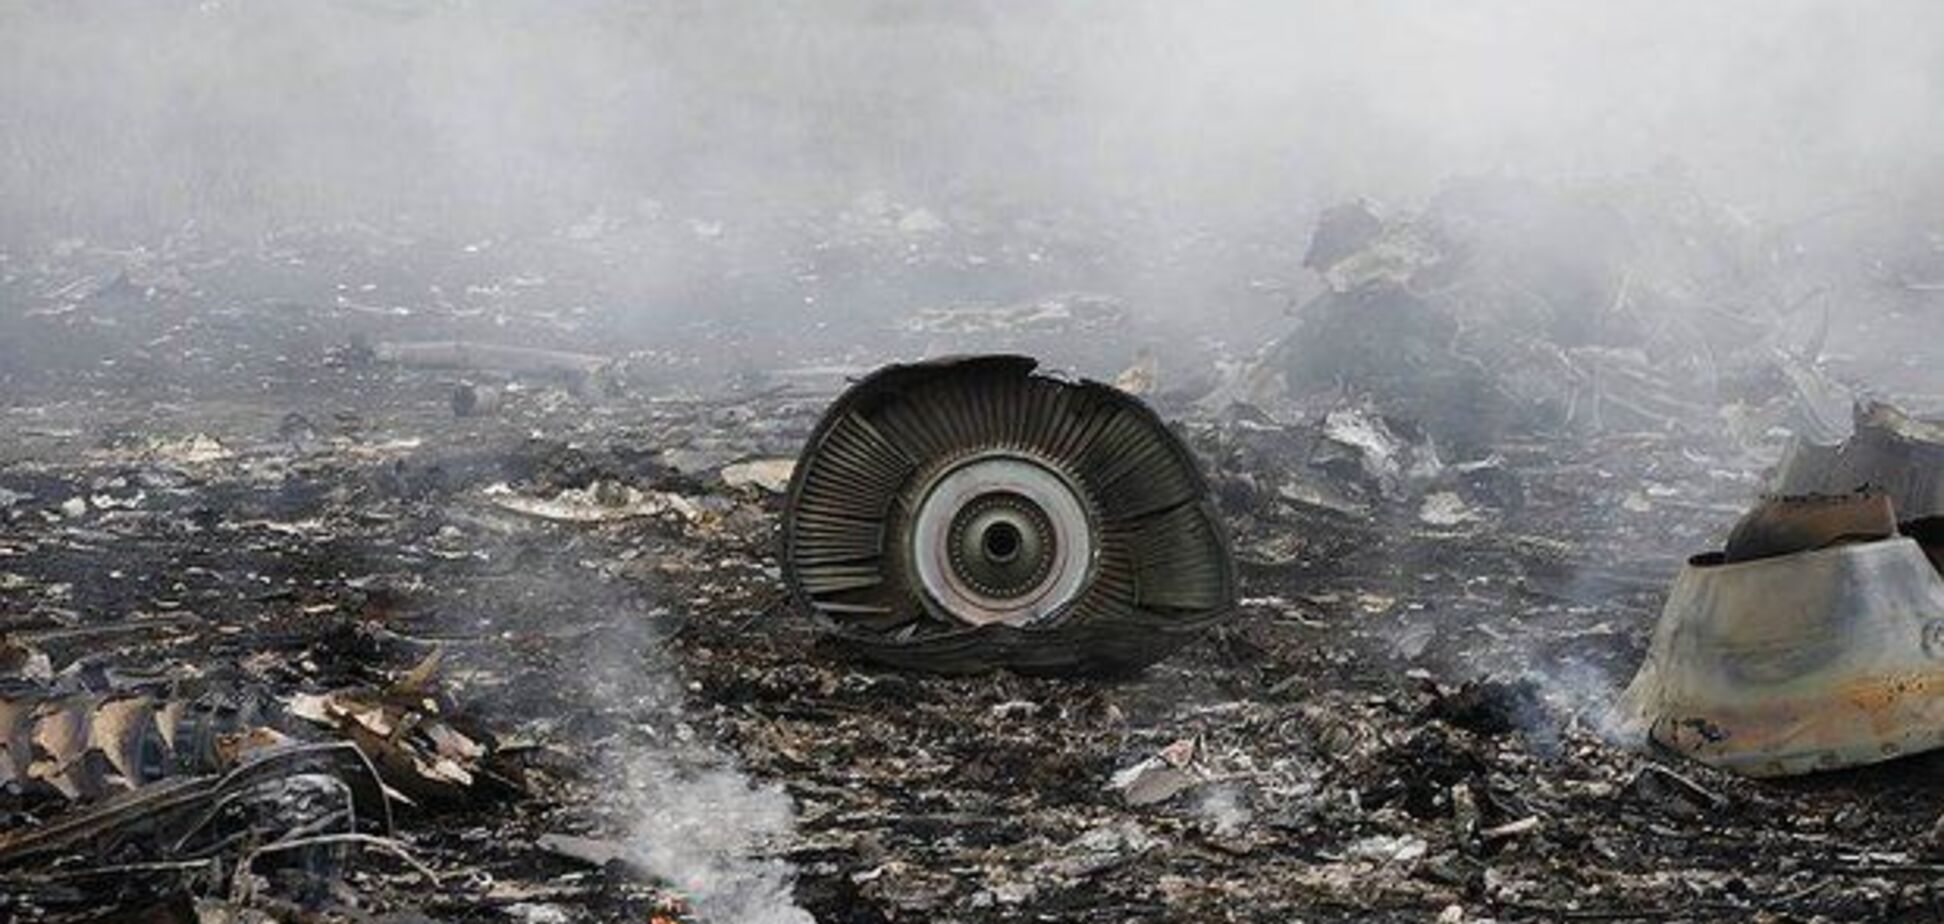 Новая версия атаки на MH17, или Проклятие диспетчера Карлоса